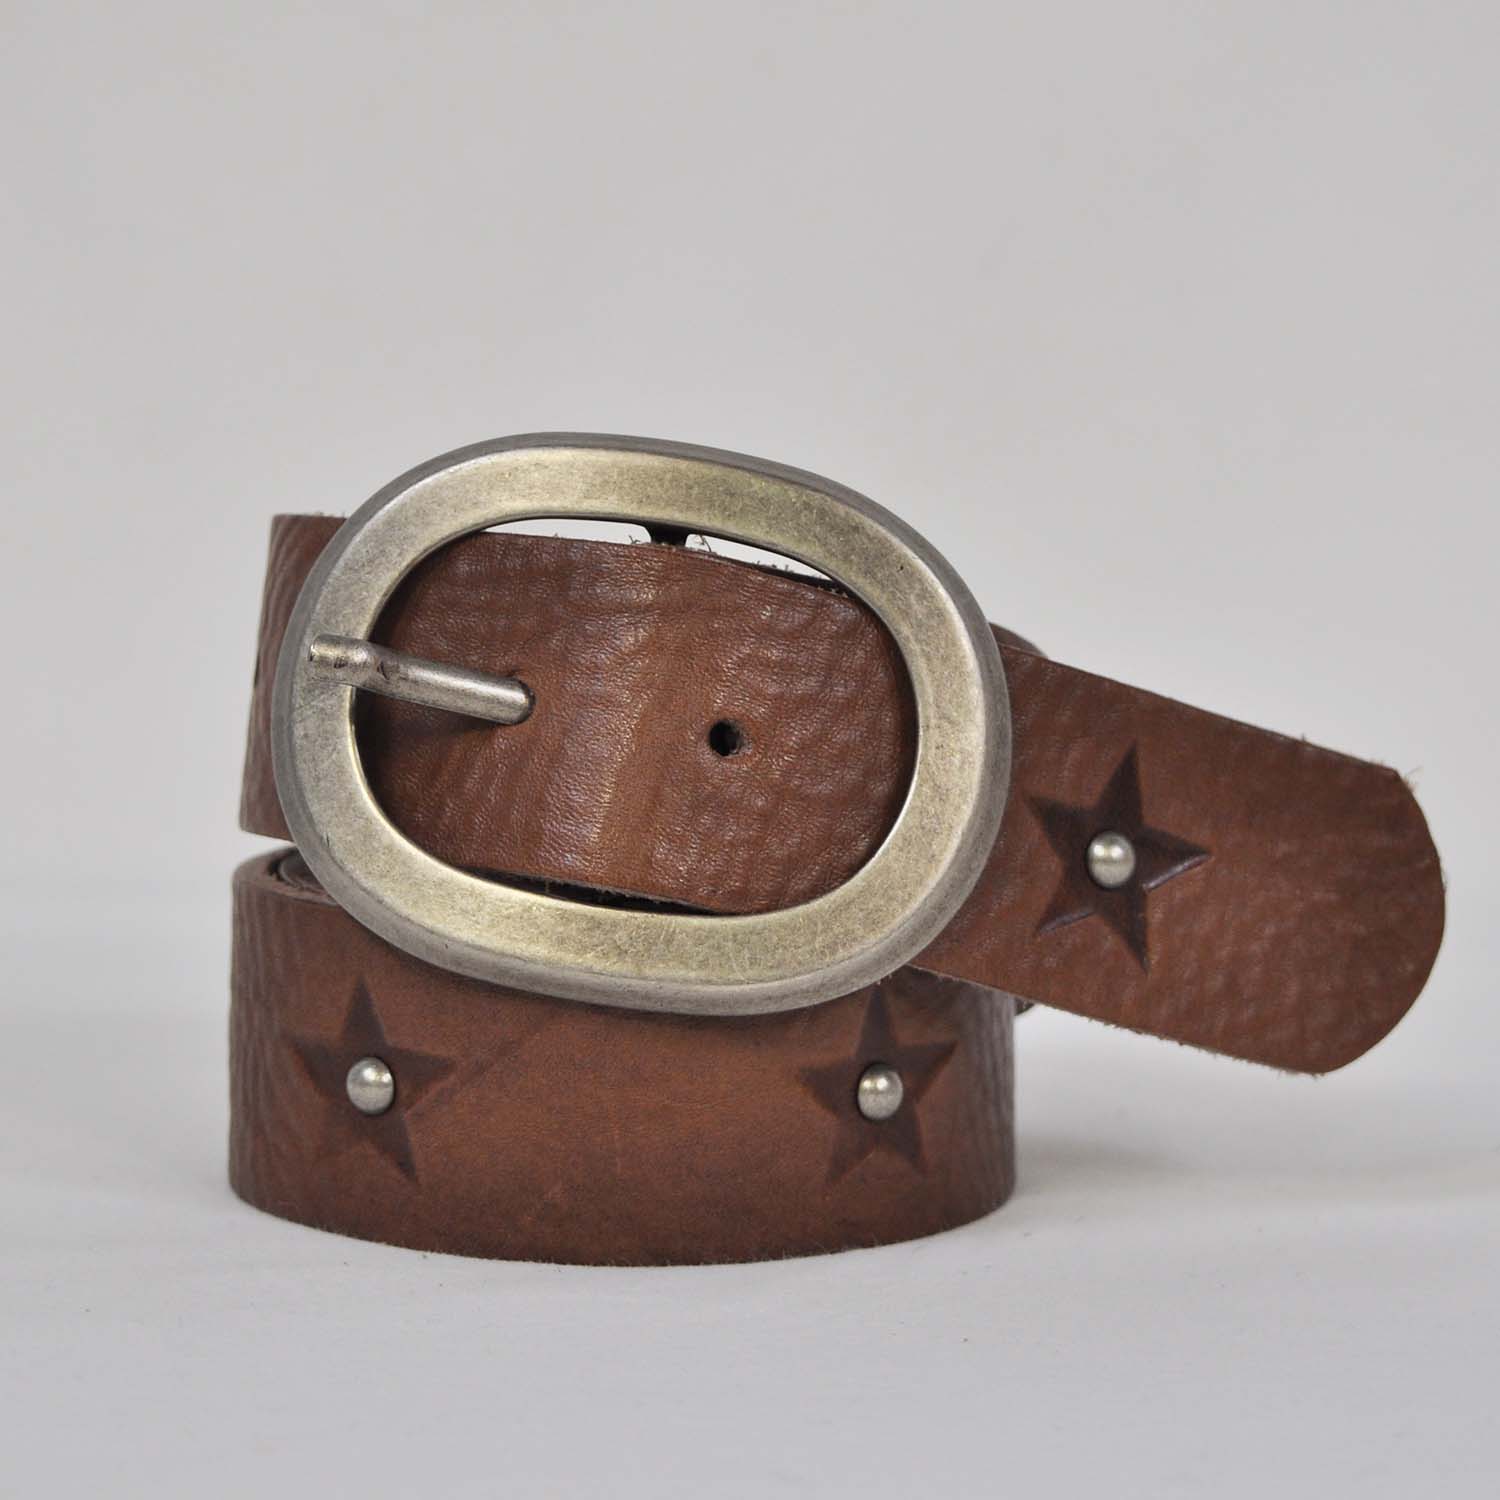 Brown engraved stars belt